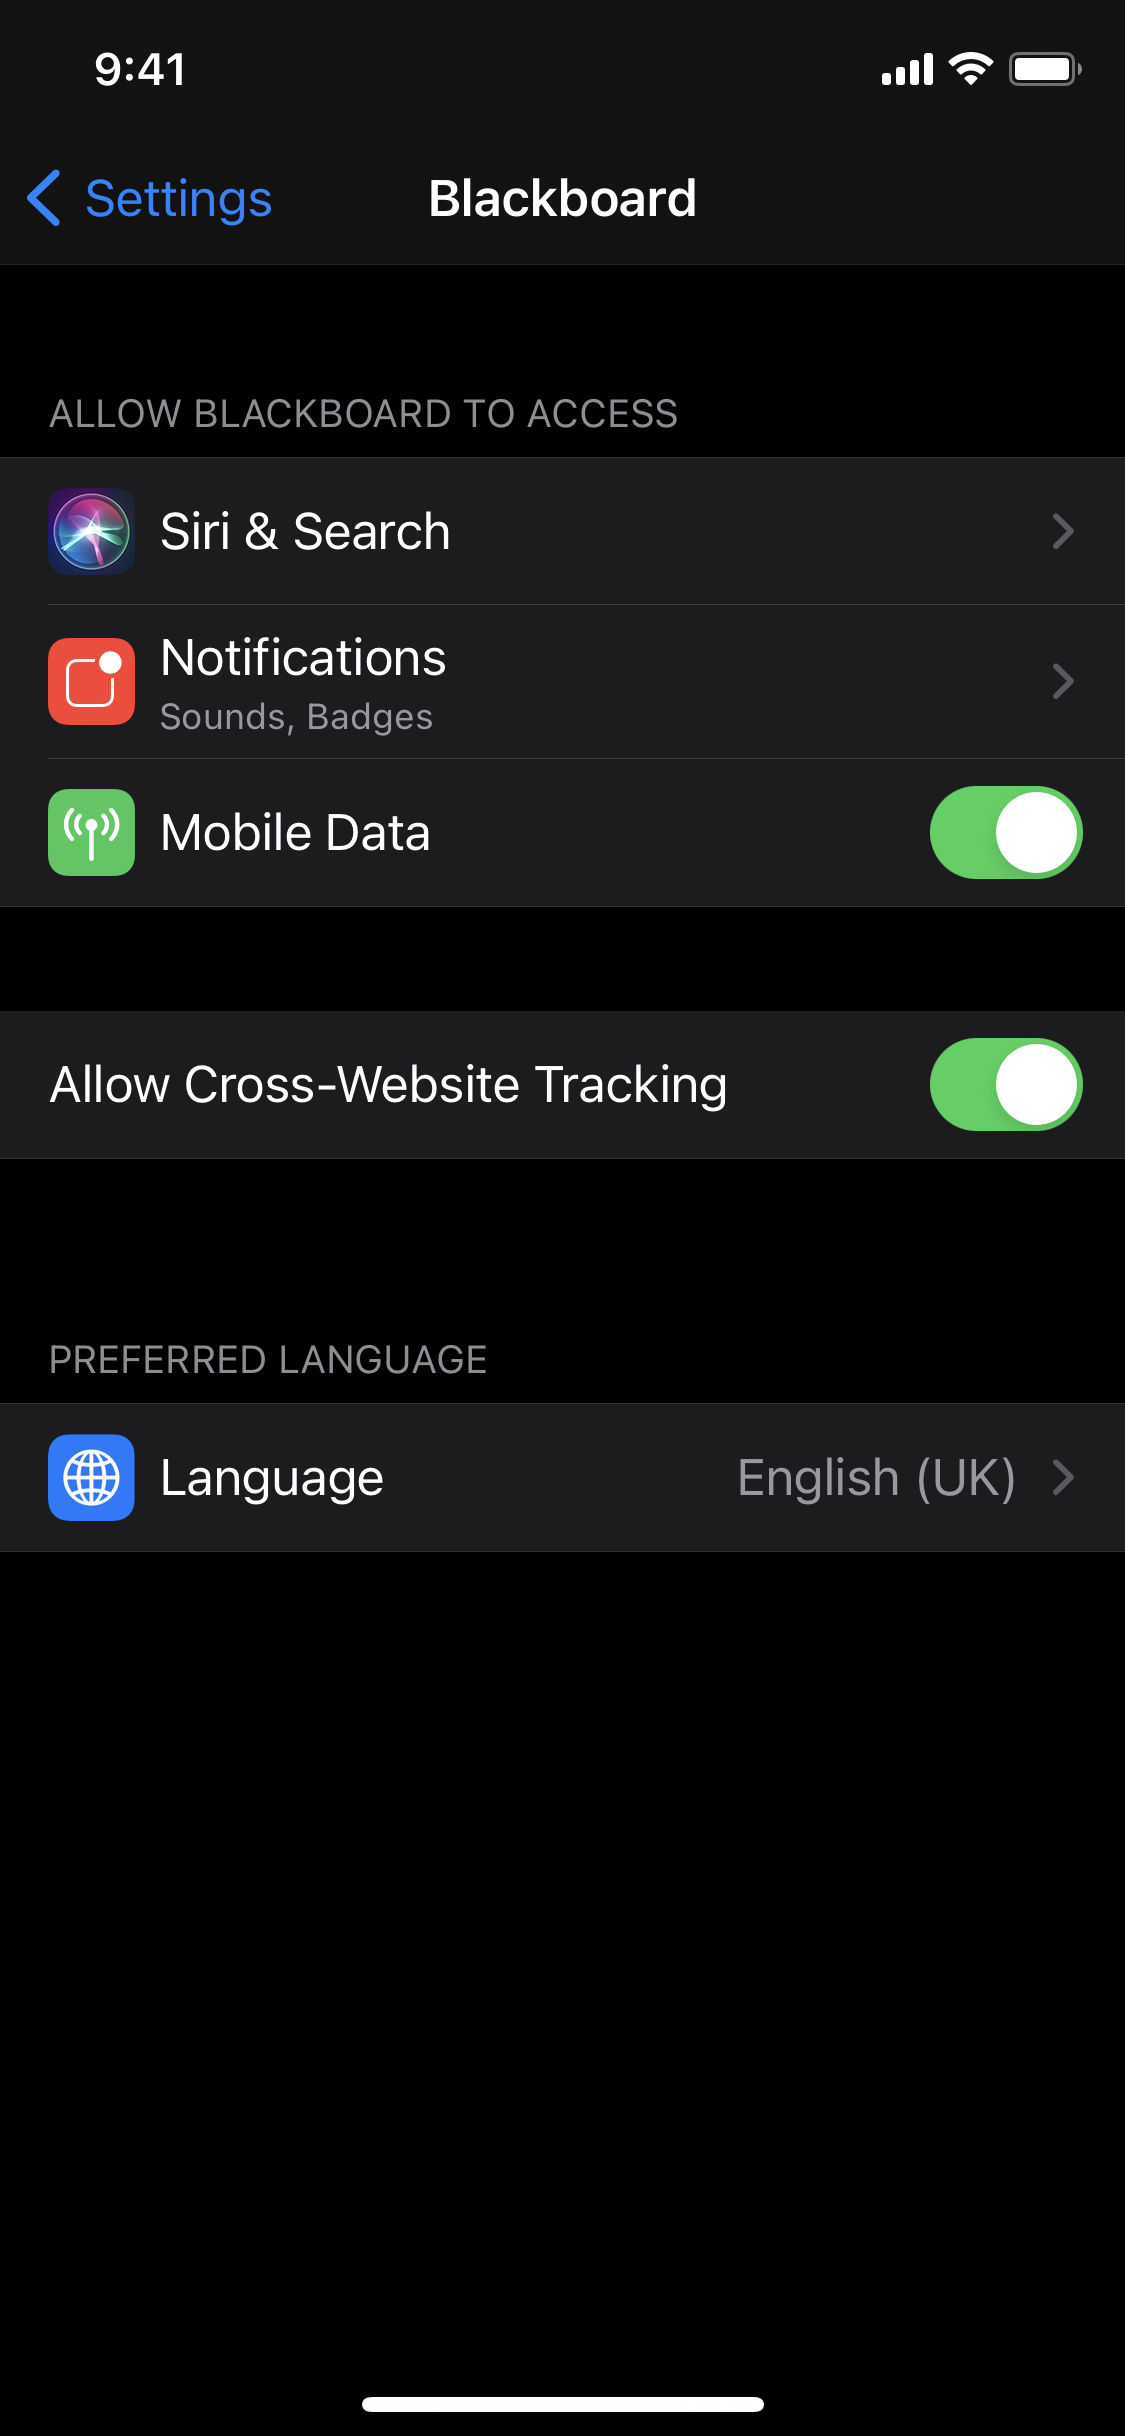 iOS Setting to Allow Cross-Website Tracking for Blackboard app and Blackboard Instructor app